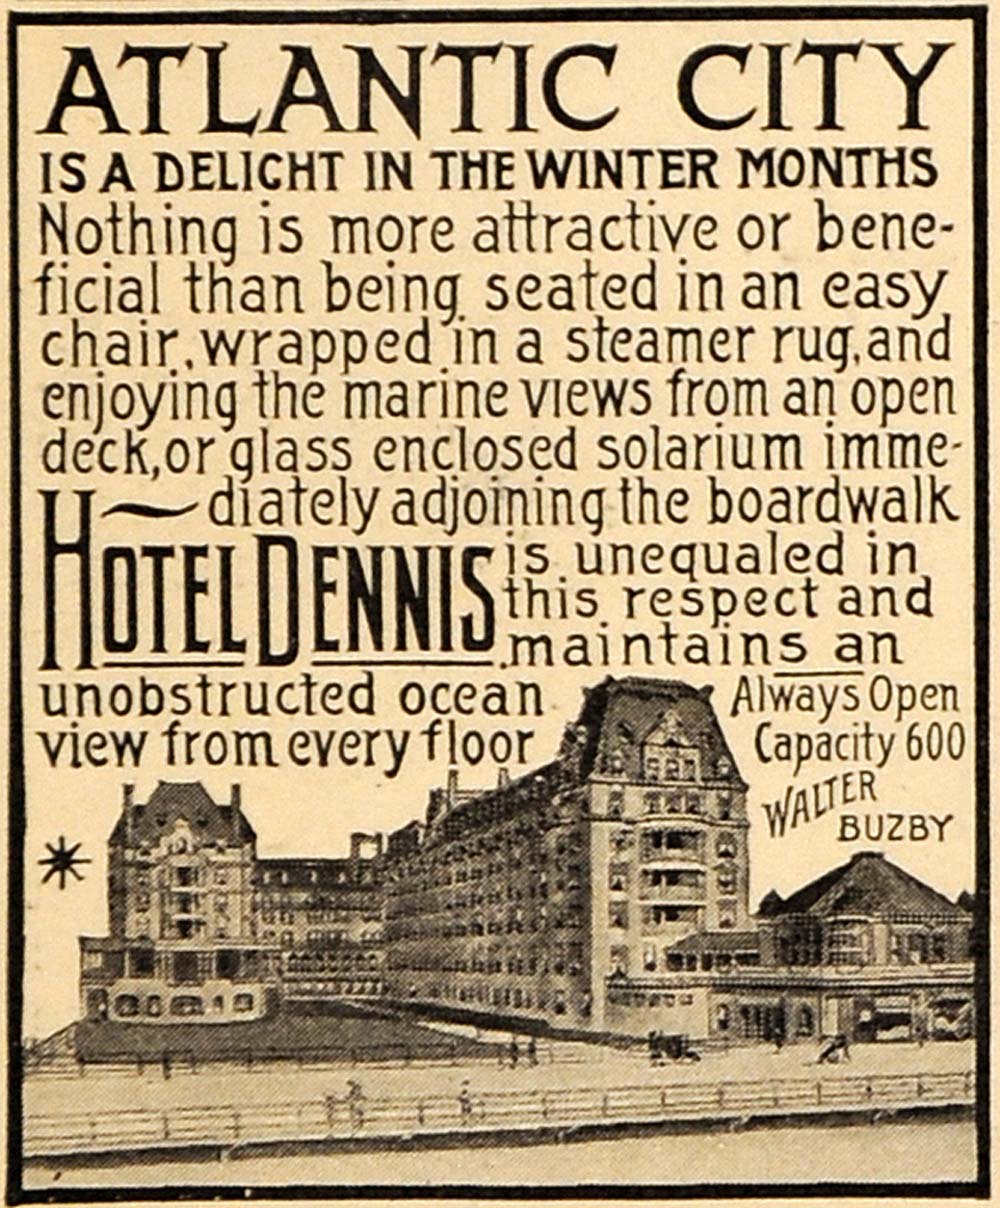 1913 Ad Hotel Dennis Lodging Vacation Atlantic City - ORIGINAL ADVERTISING EM1